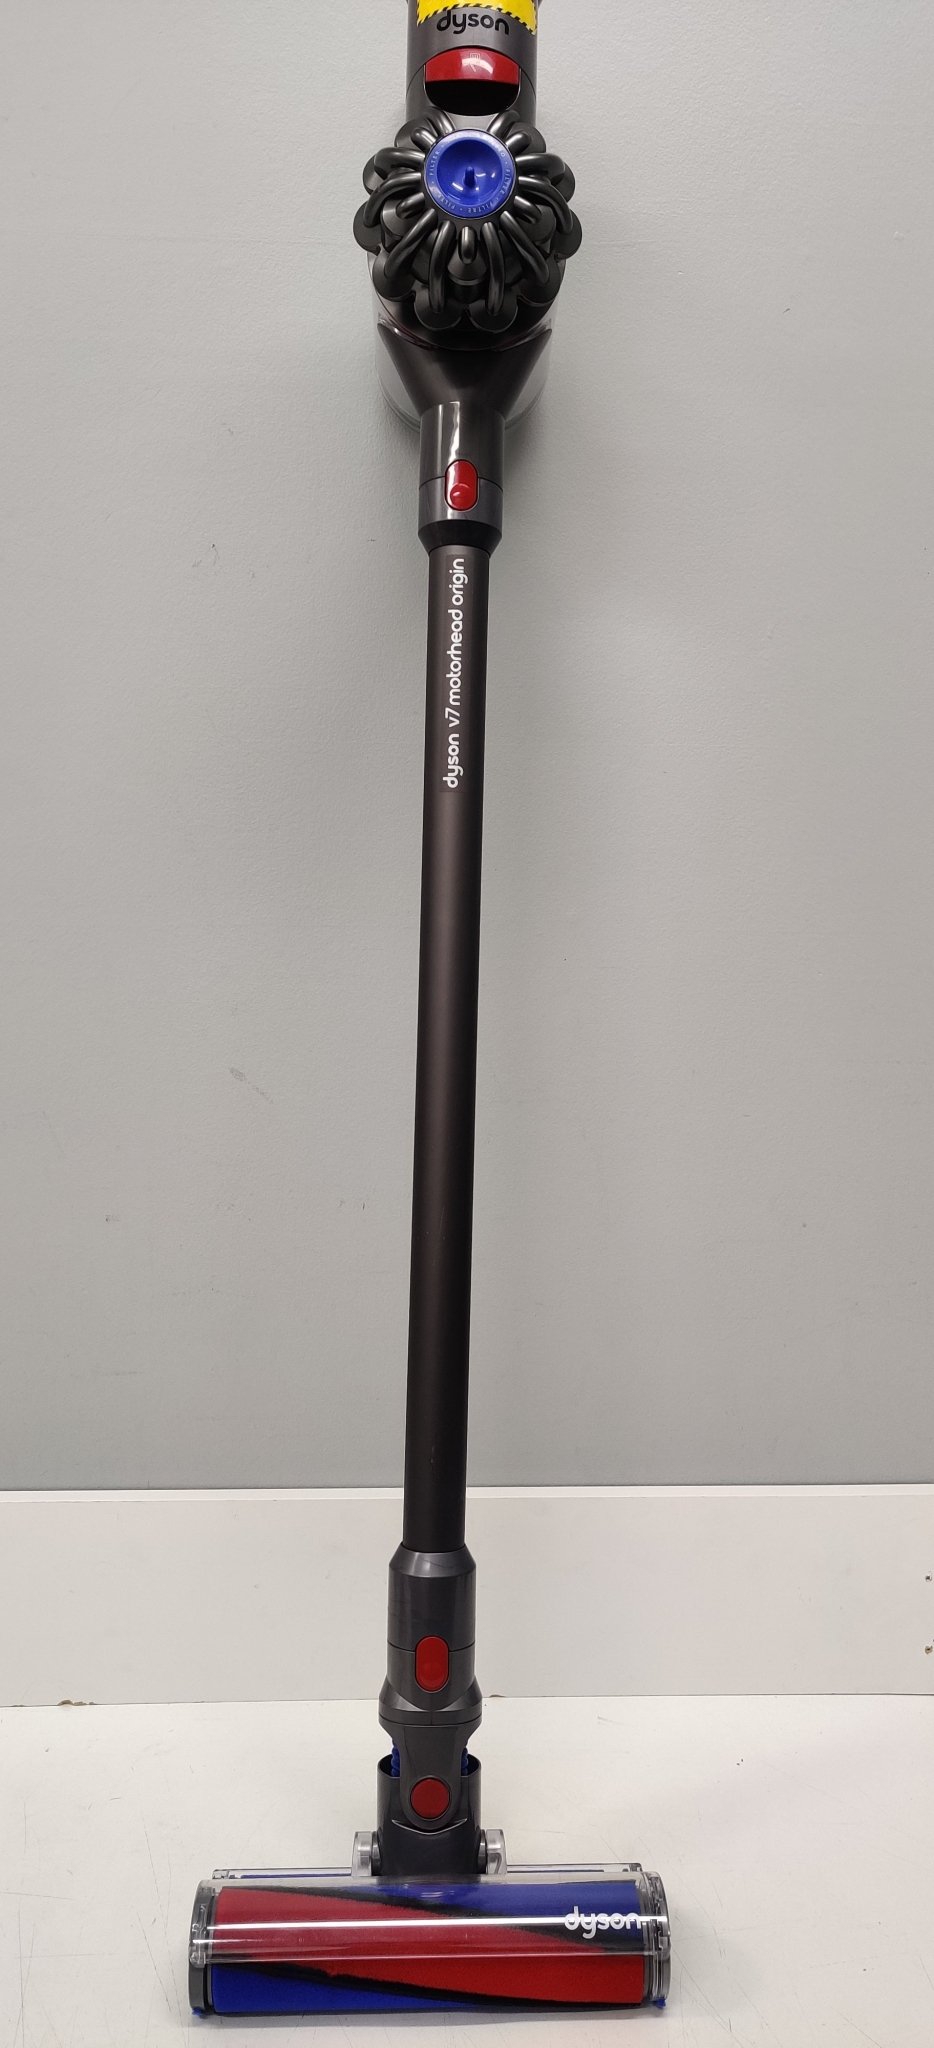 Refurbished Dyson V7 Complete Hardfloor Cordless Stick Vacuum